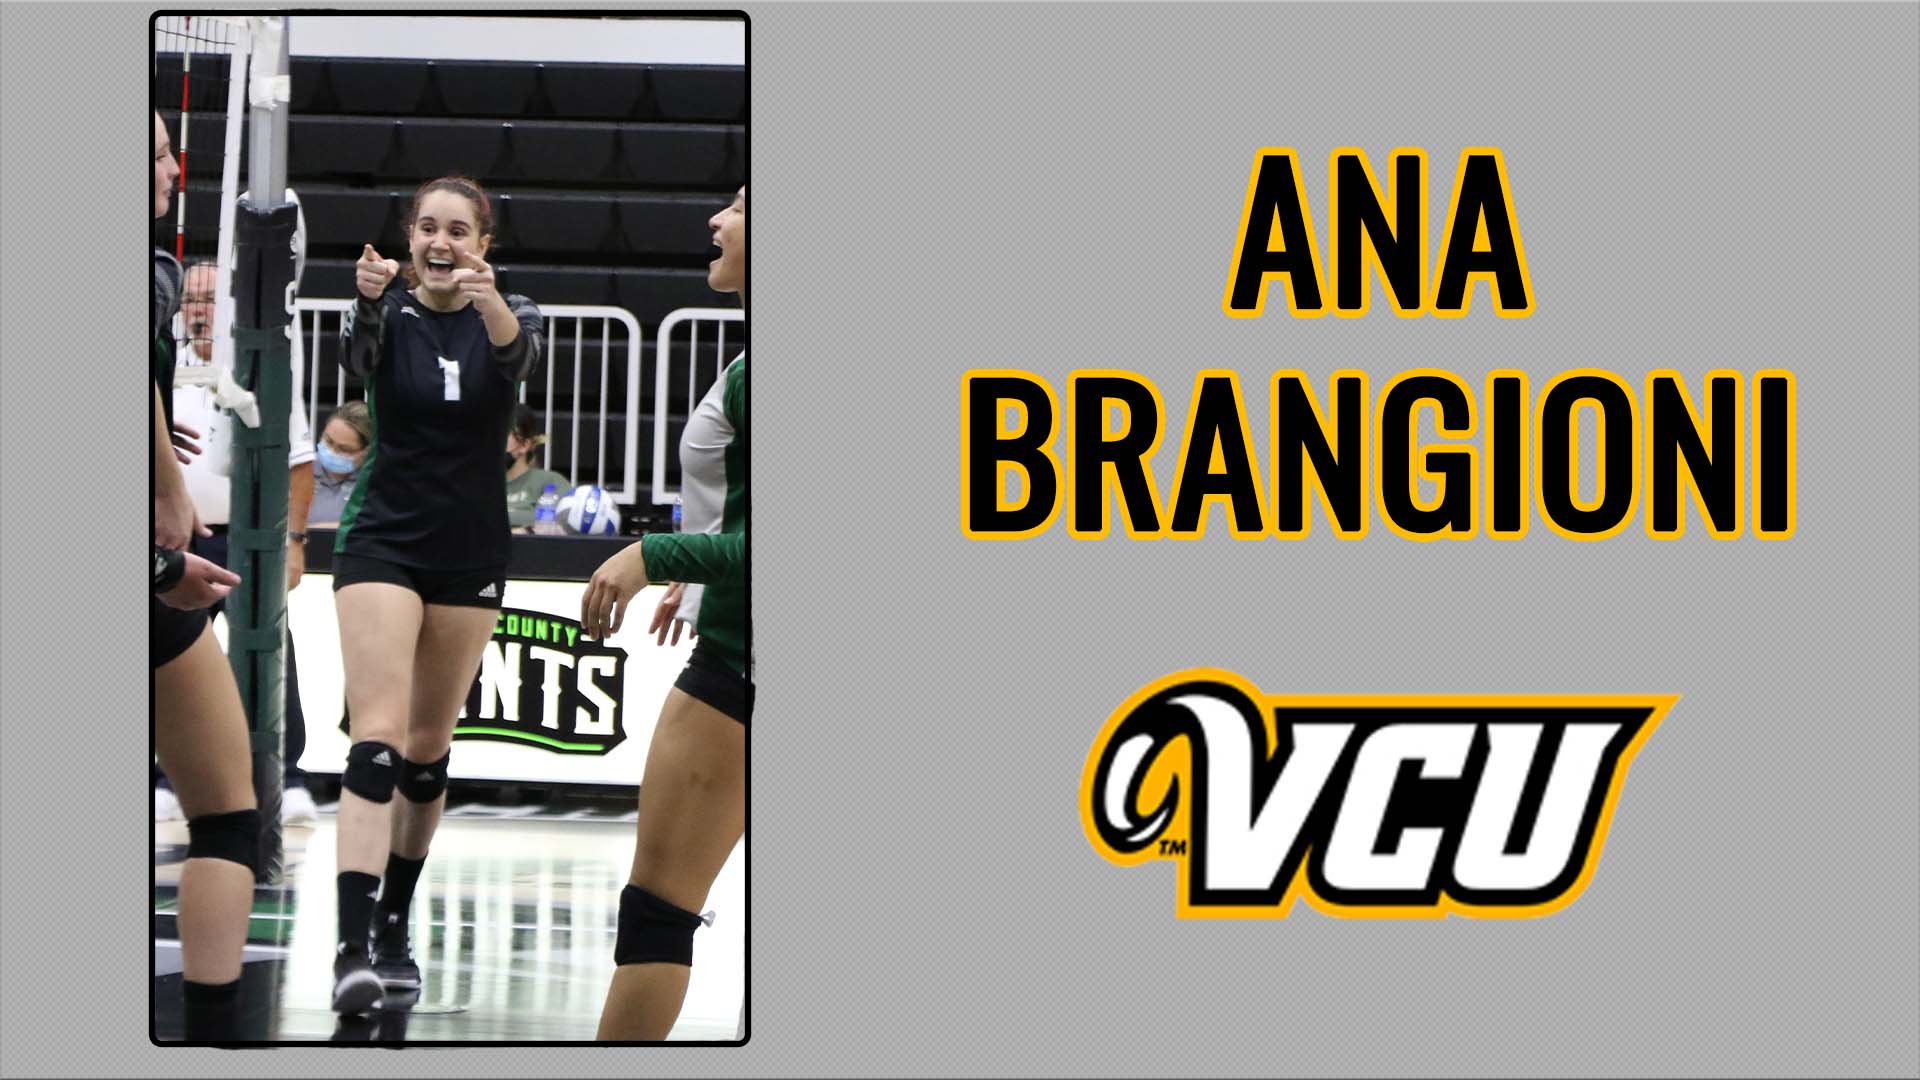 Ana Brangioni Signs with VCU